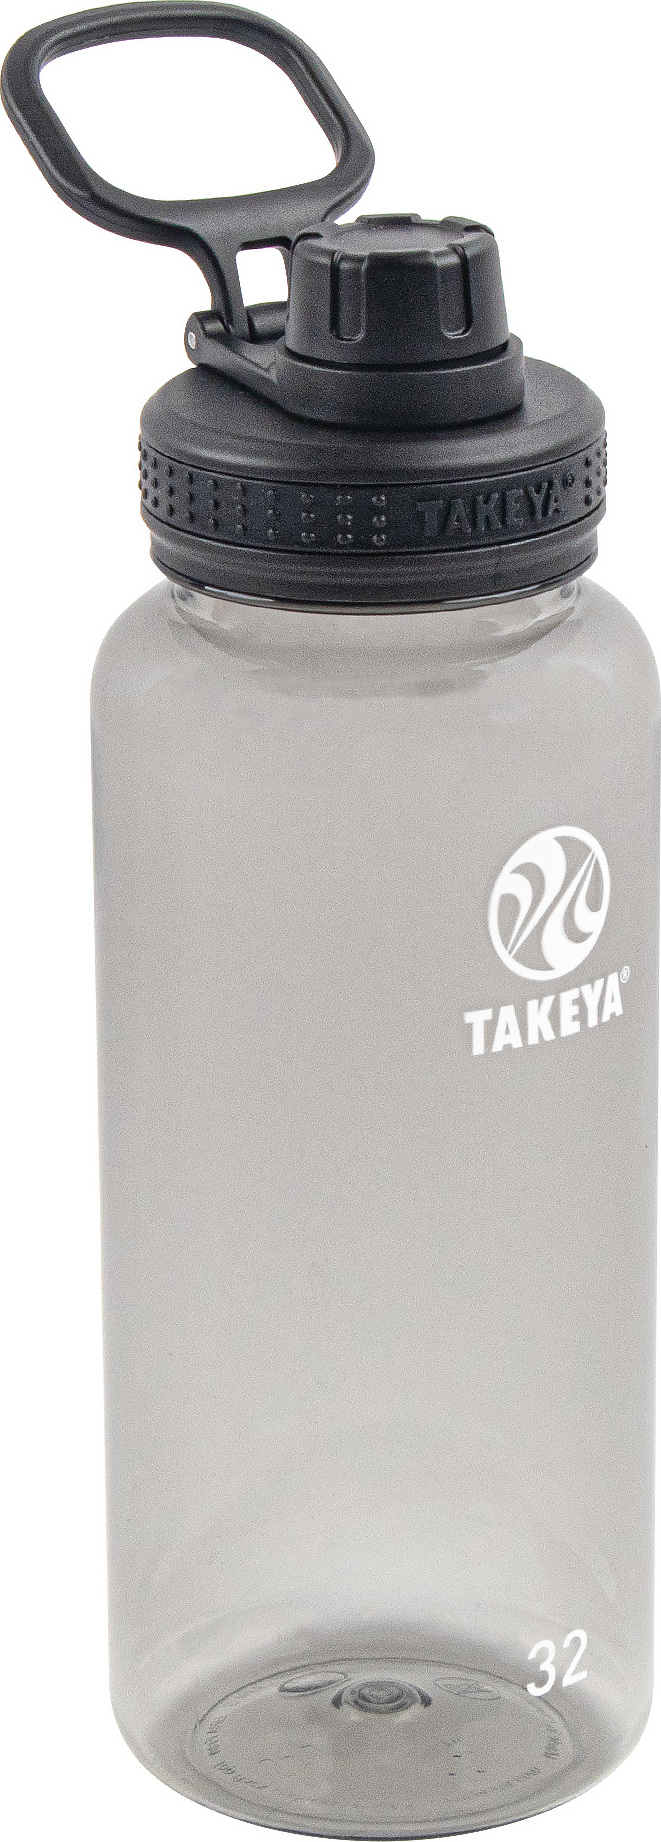 Takeya Tritan Bottle 950 ml Stormy Black 950 ml, Stormy Black